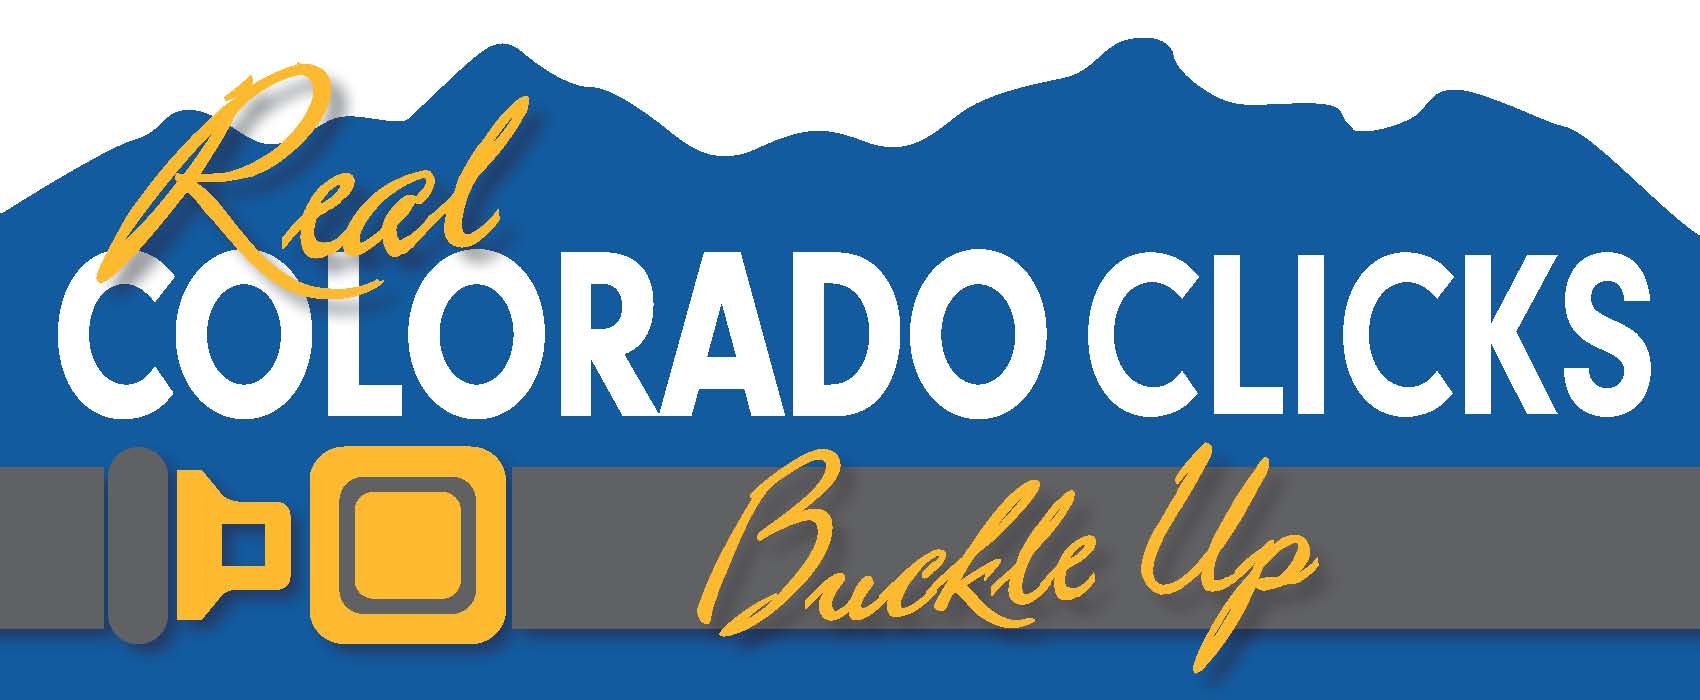 Real Colorado logo.jpg detail image